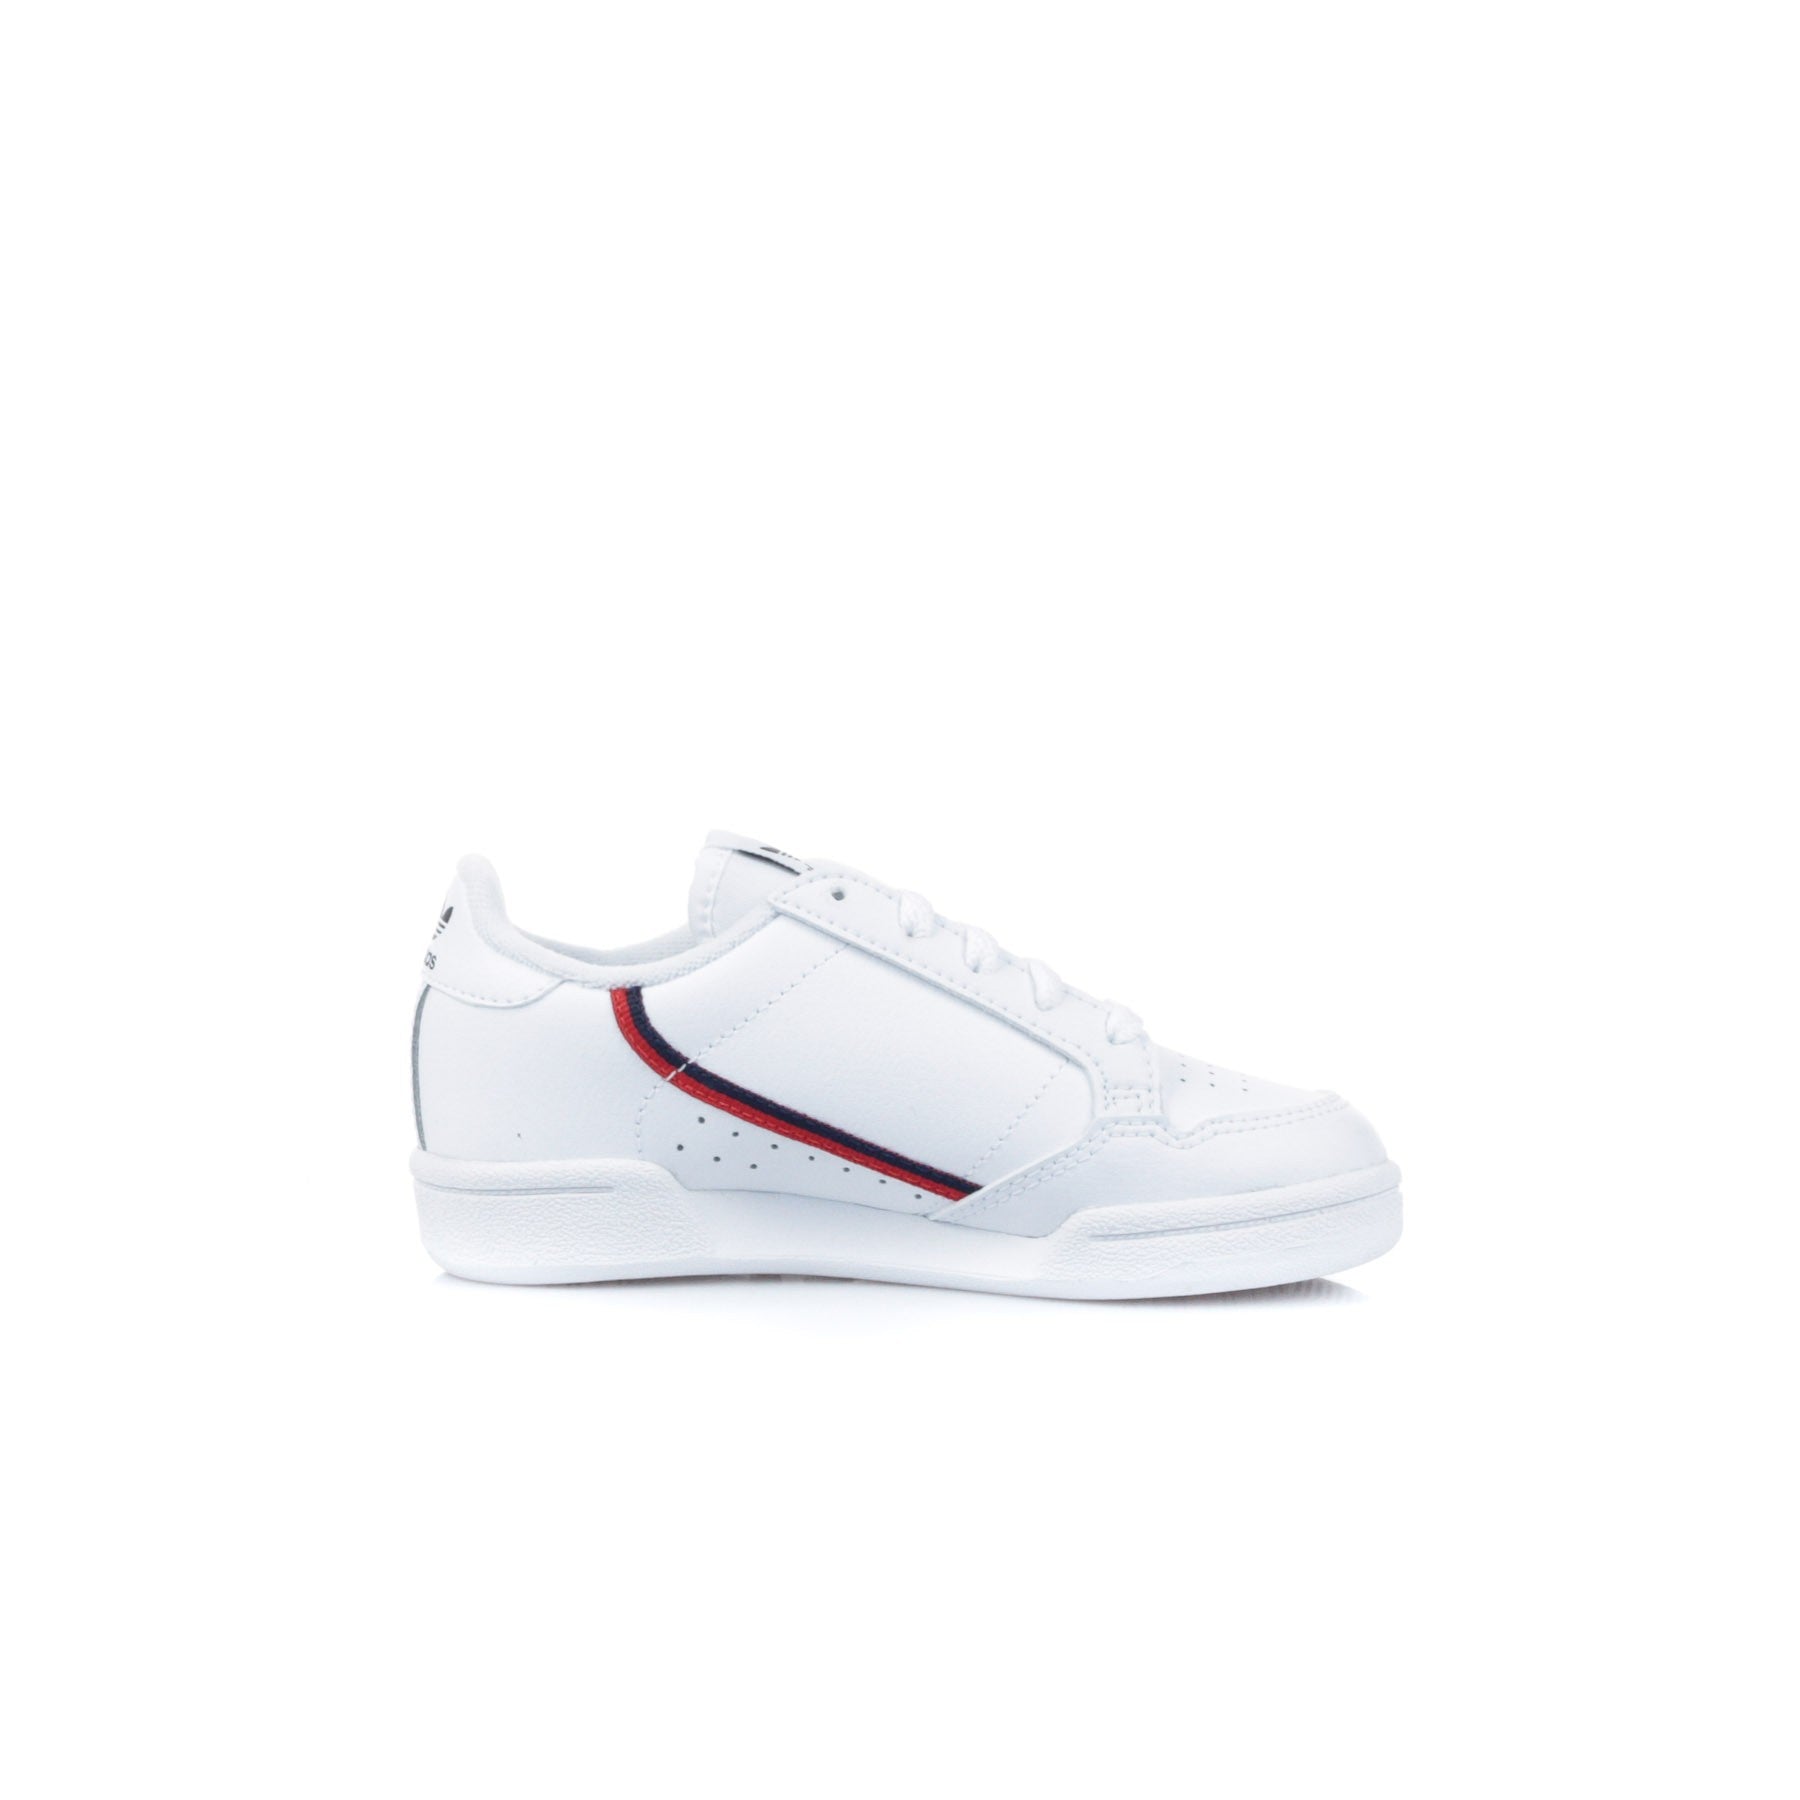 Adidas, Scarpa Bassa Bambino Continental 80c, 